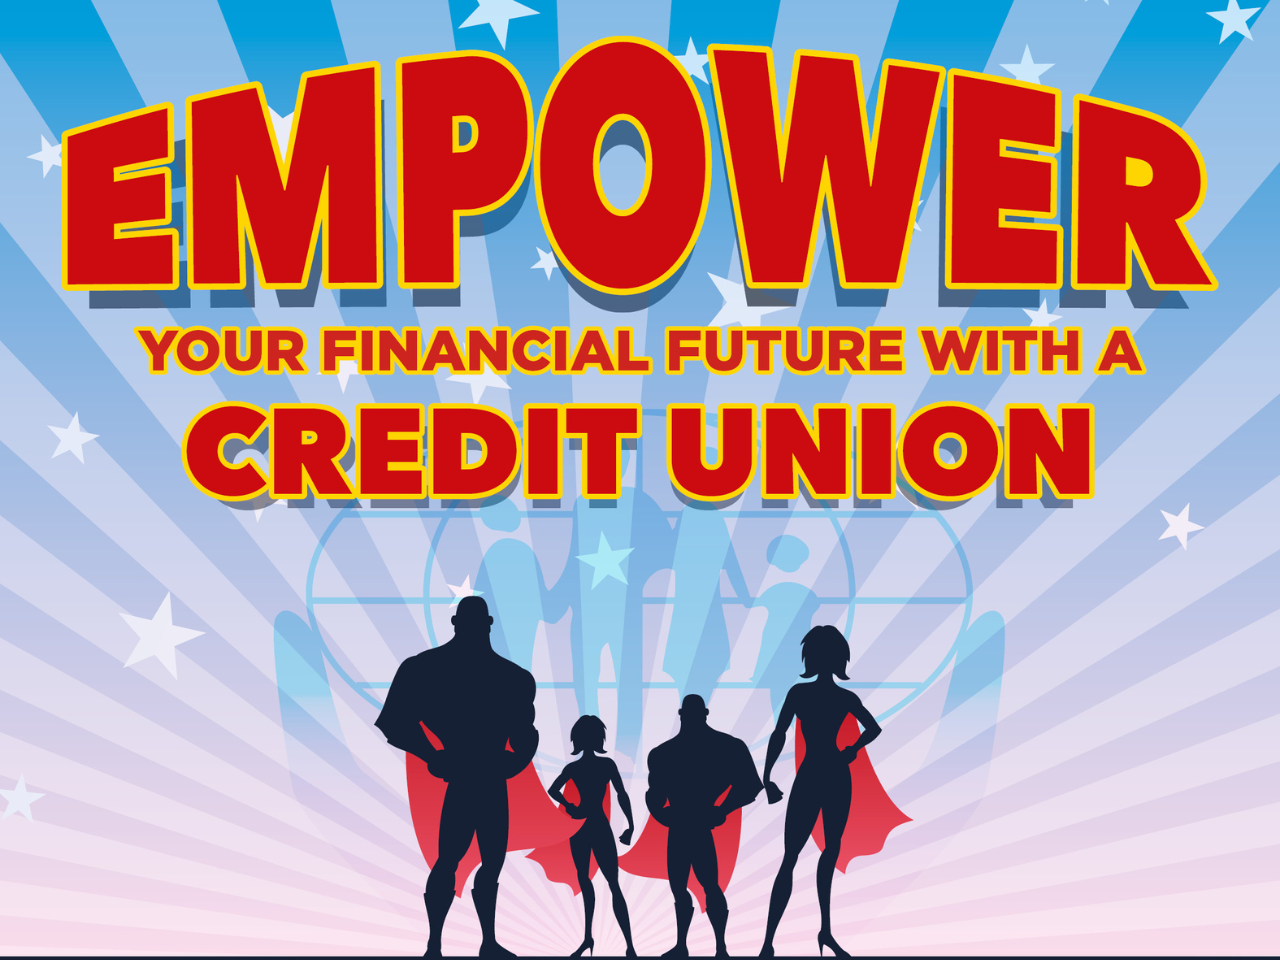 Portadown Credit Union celebrates International Credit Union Day® 2022